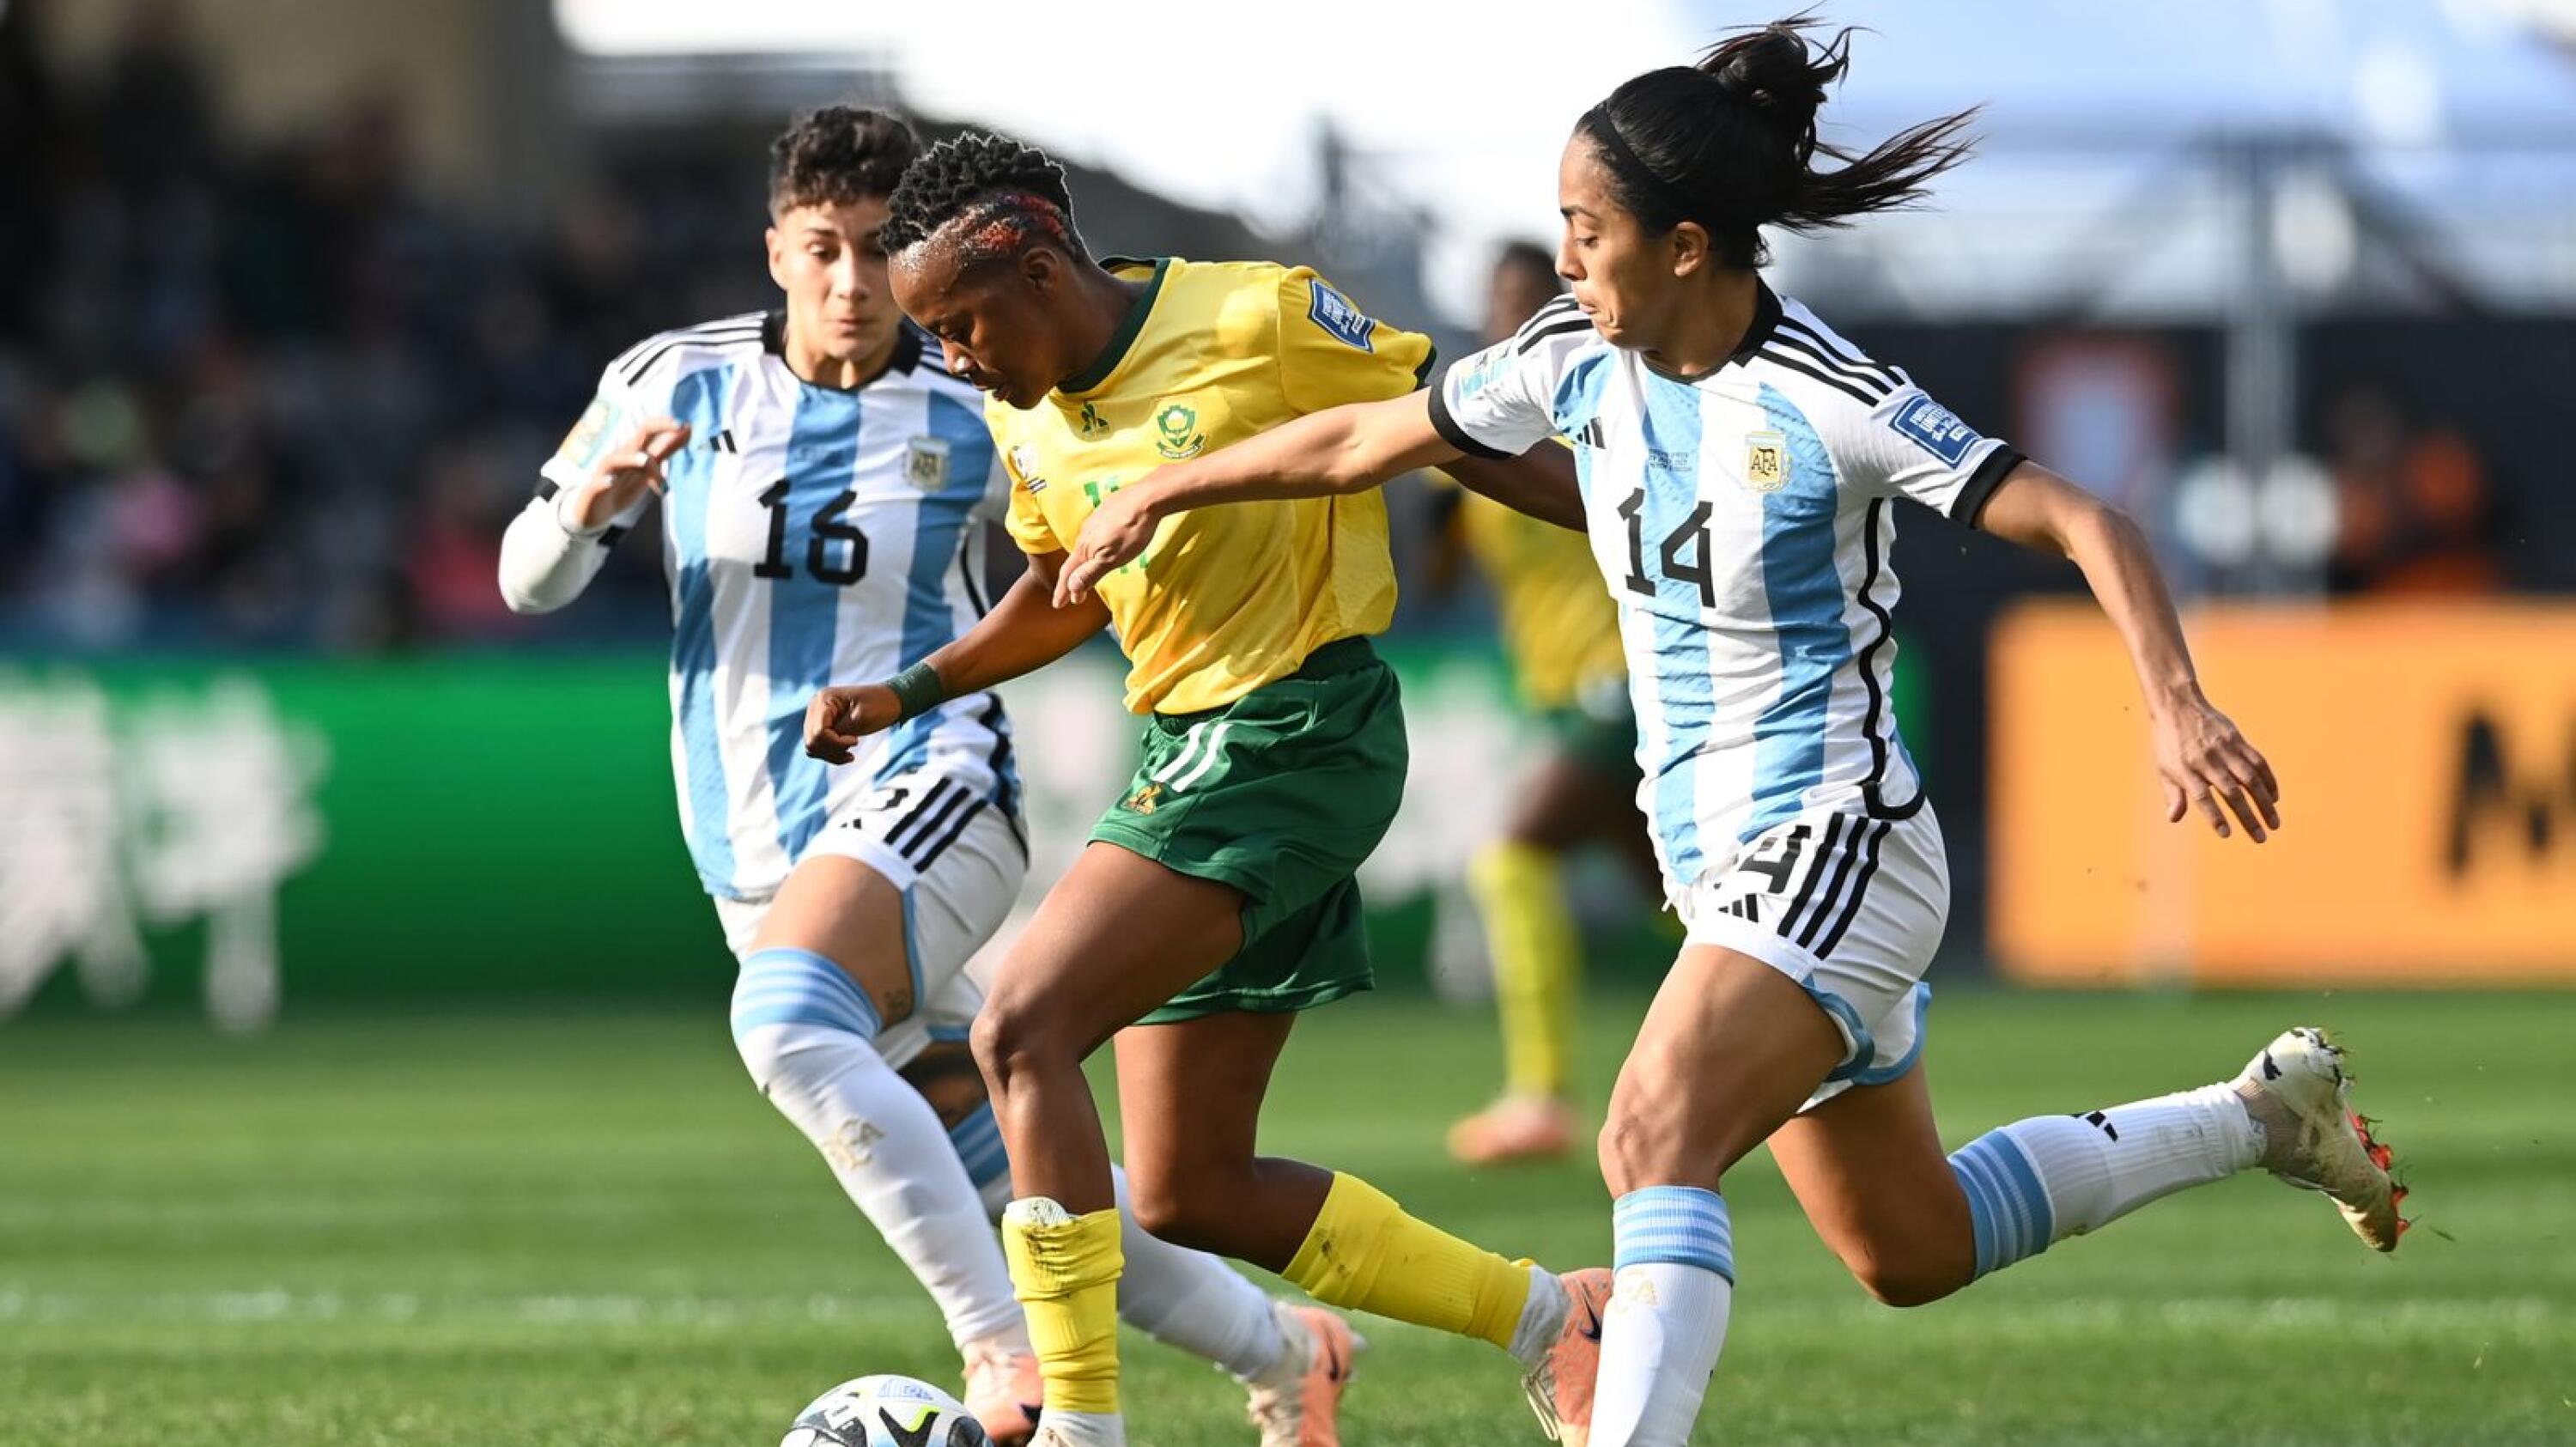 Banyana Banyana forward Thembi Kgatlana dribbles with the ball against Argentina at the Fifa Women’s World Cup.